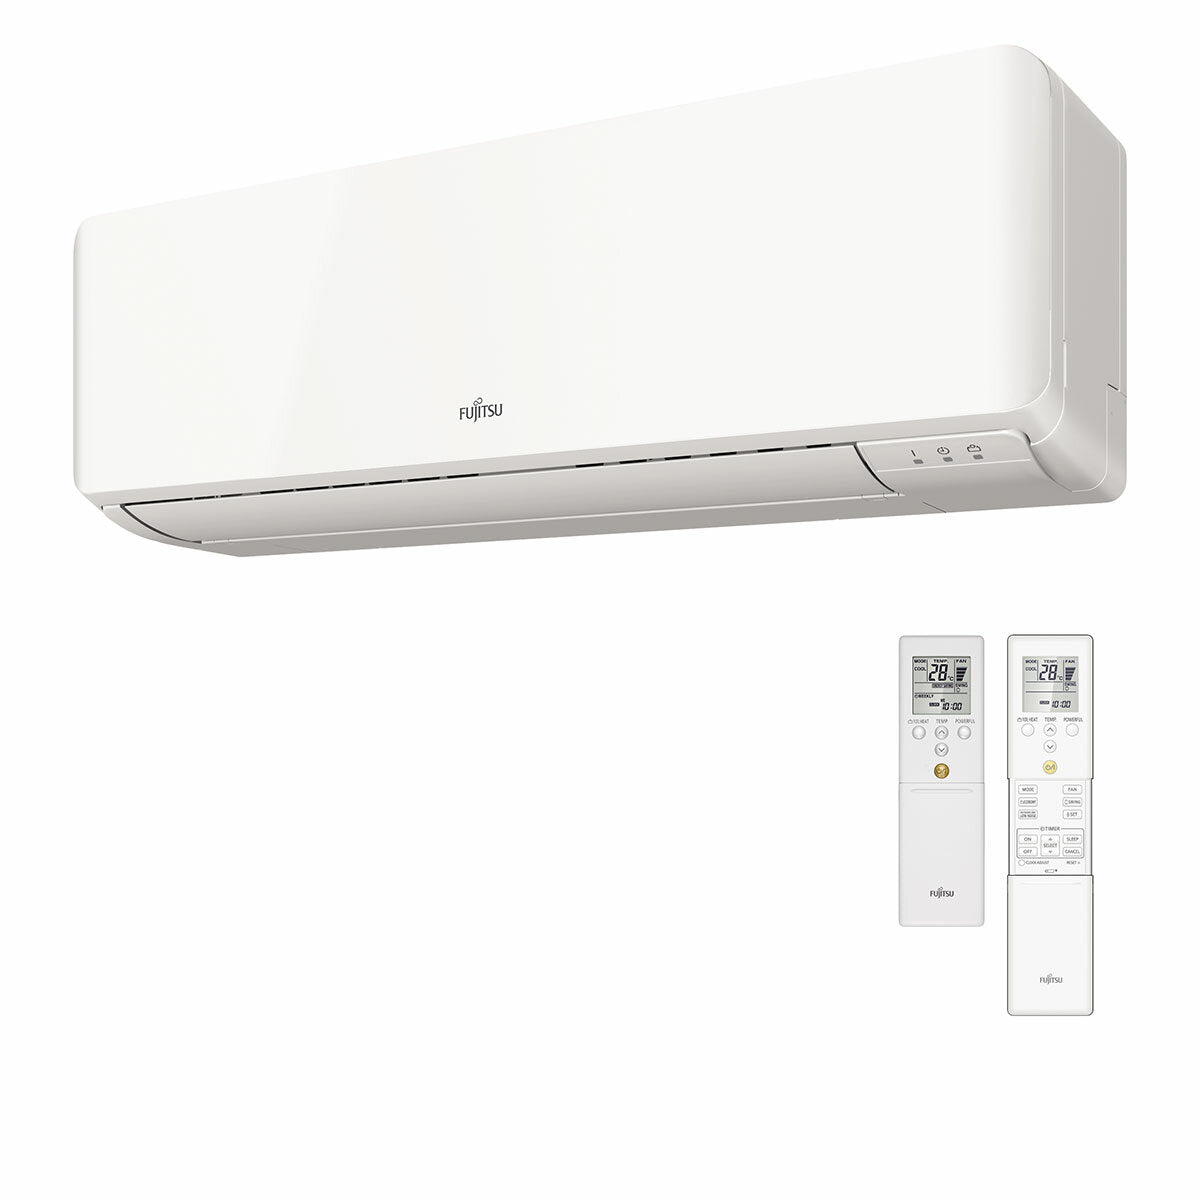 Fujitsu KM WiFi Series trial split air conditioner 7000+7000+9000 BTU inverter A+++ external unit 5.4 kW